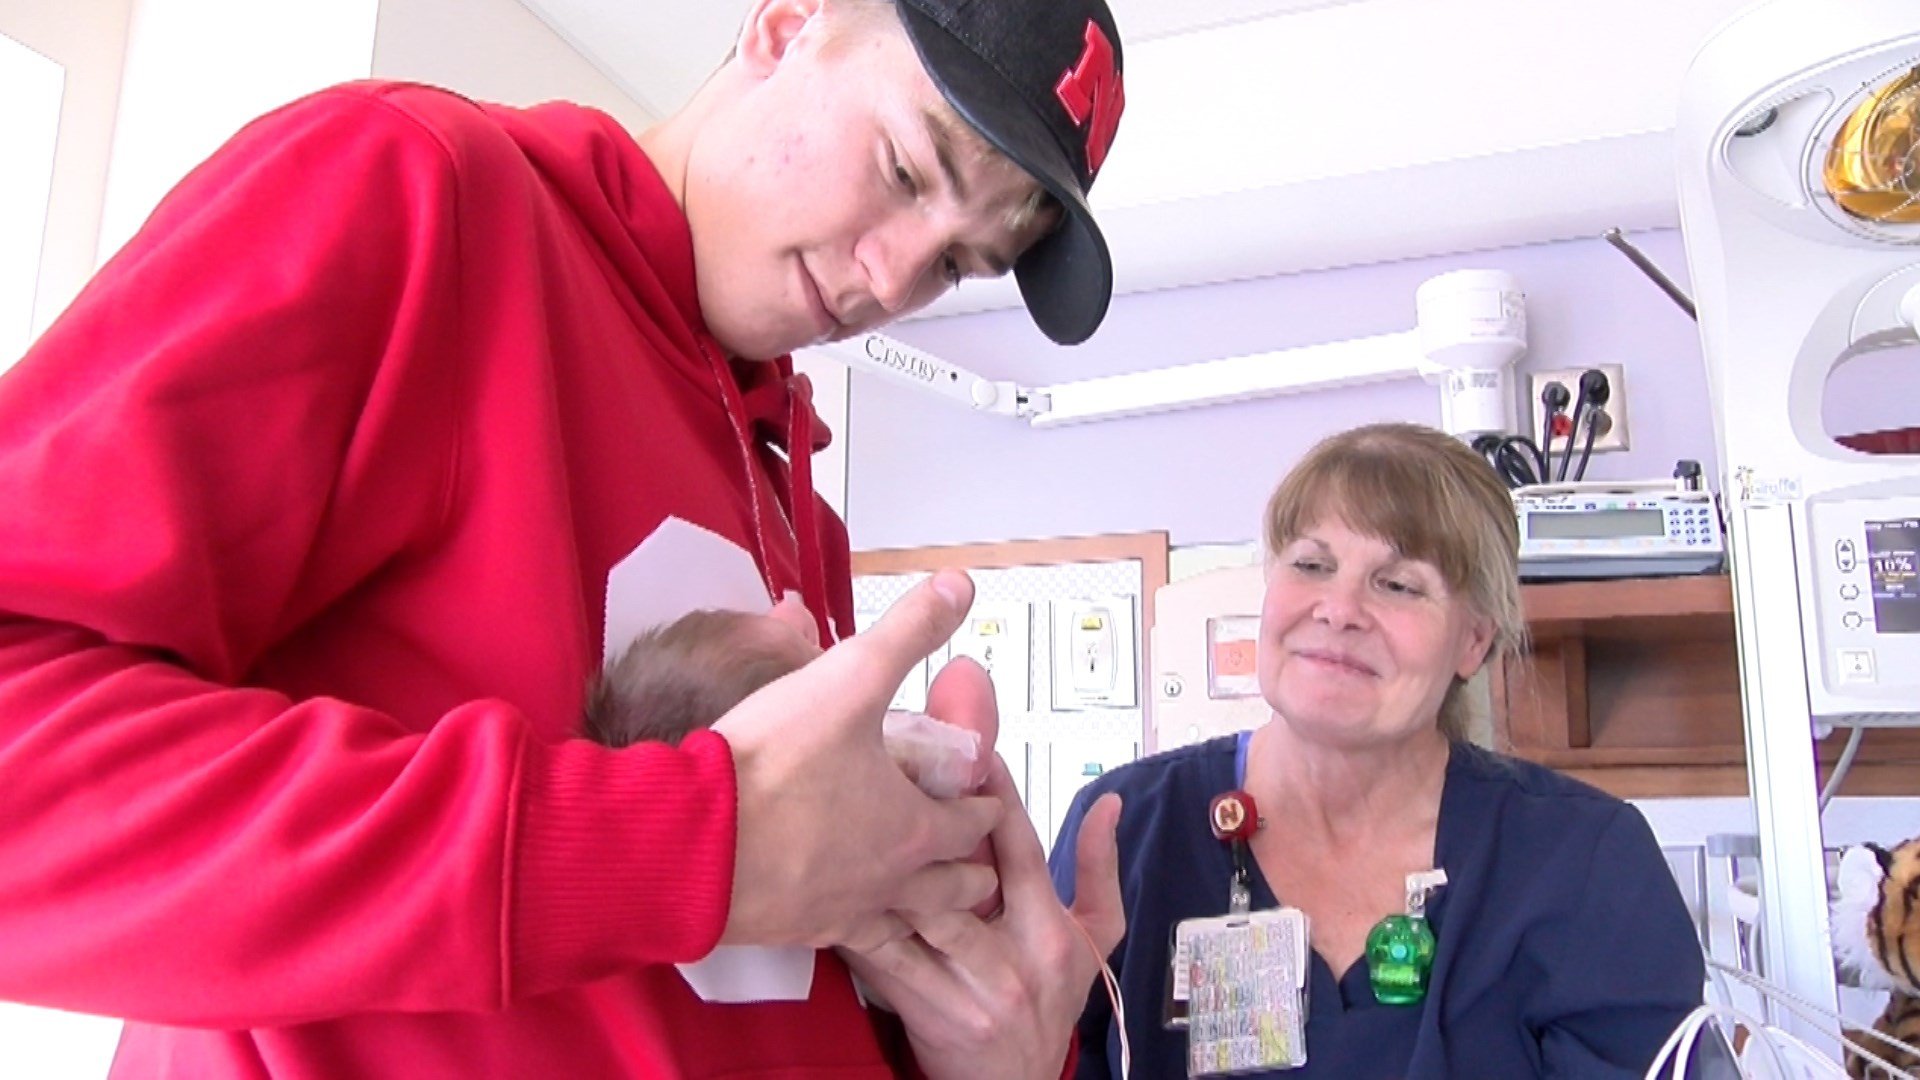 Husker Football players visit hospital patients